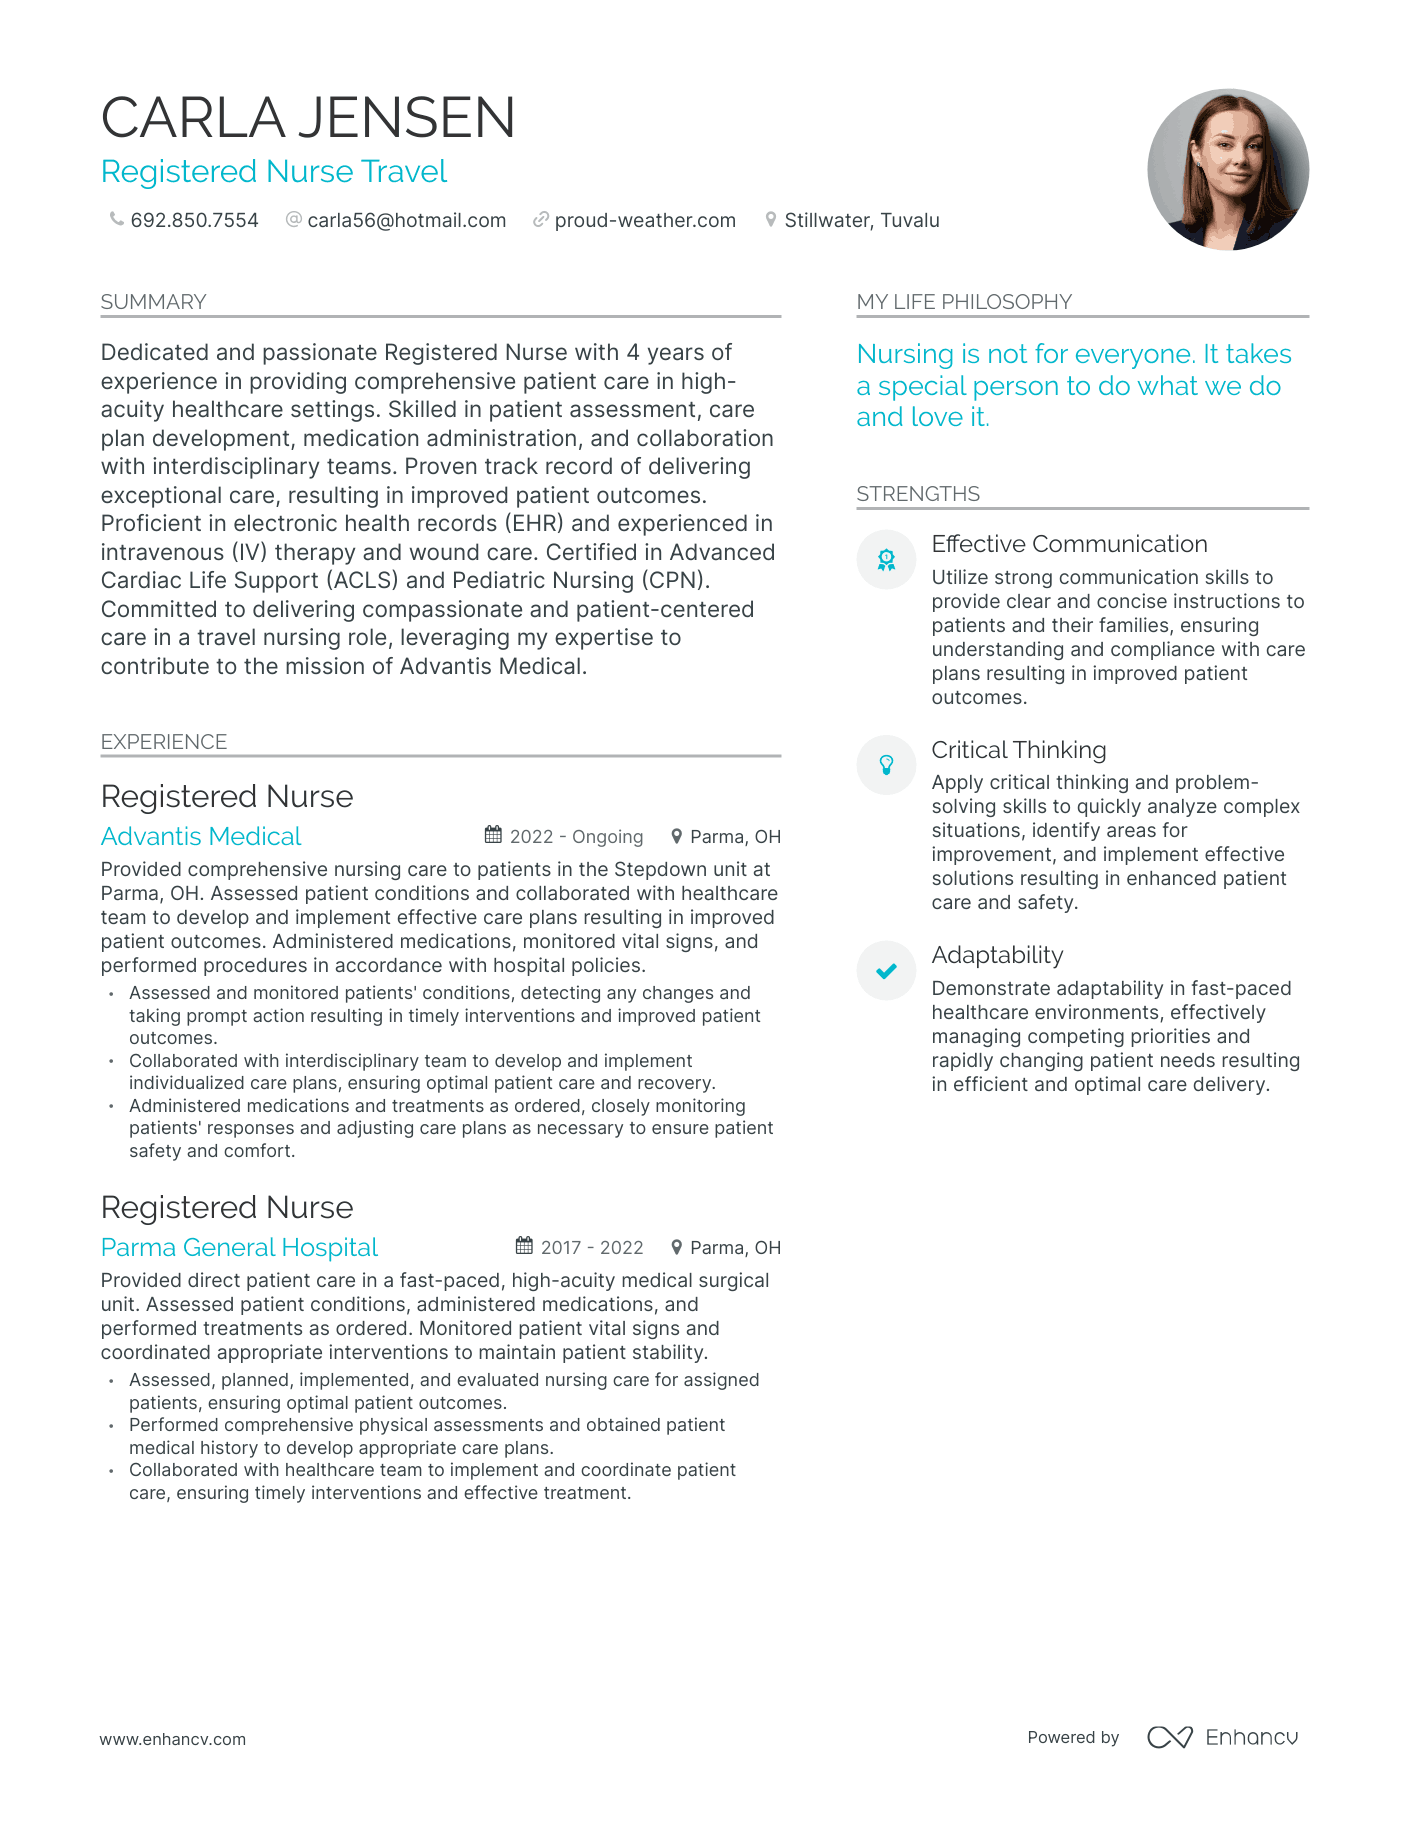 Registered Nurse Travel resume example